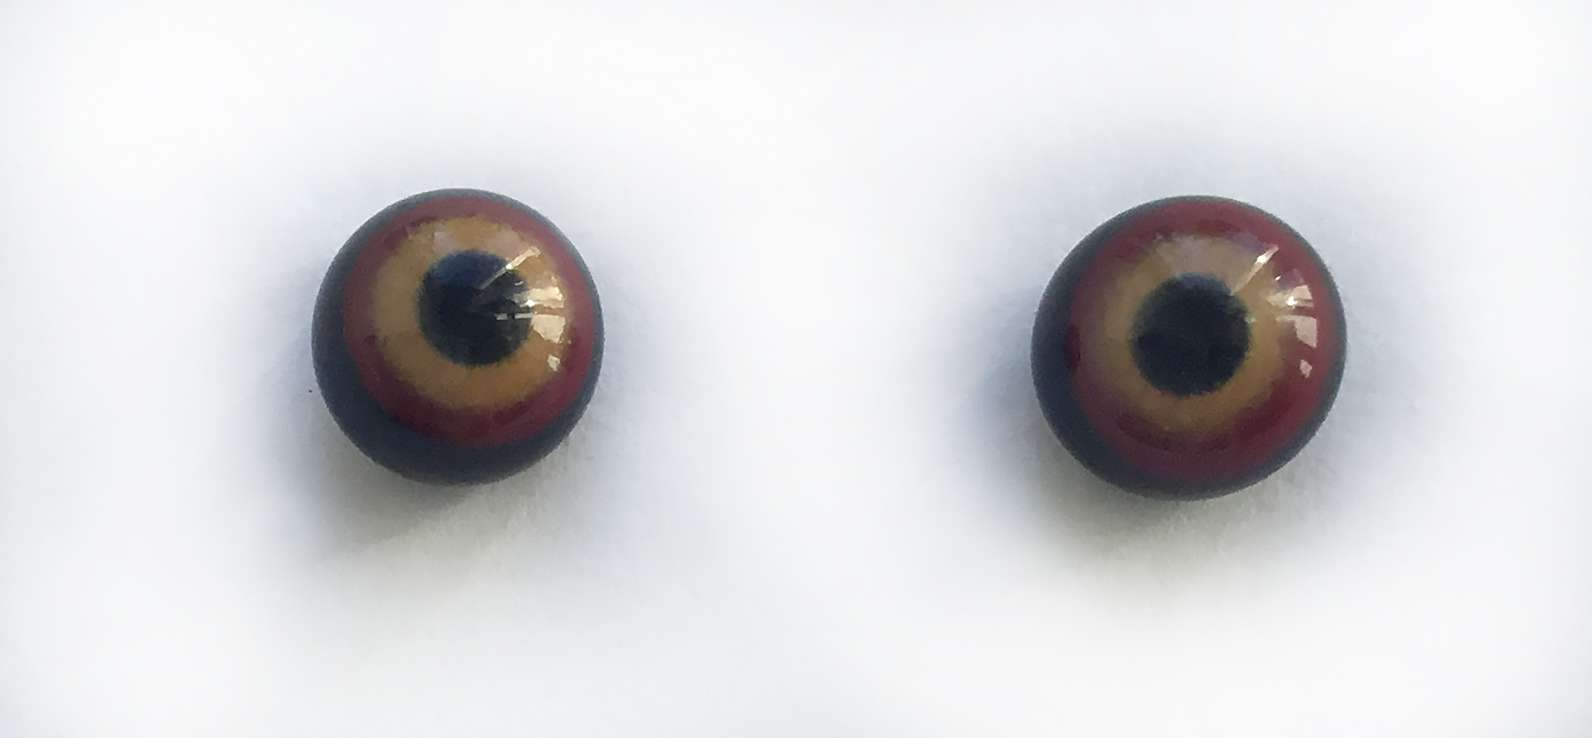 Cherry on black. 6 mm 3 euro